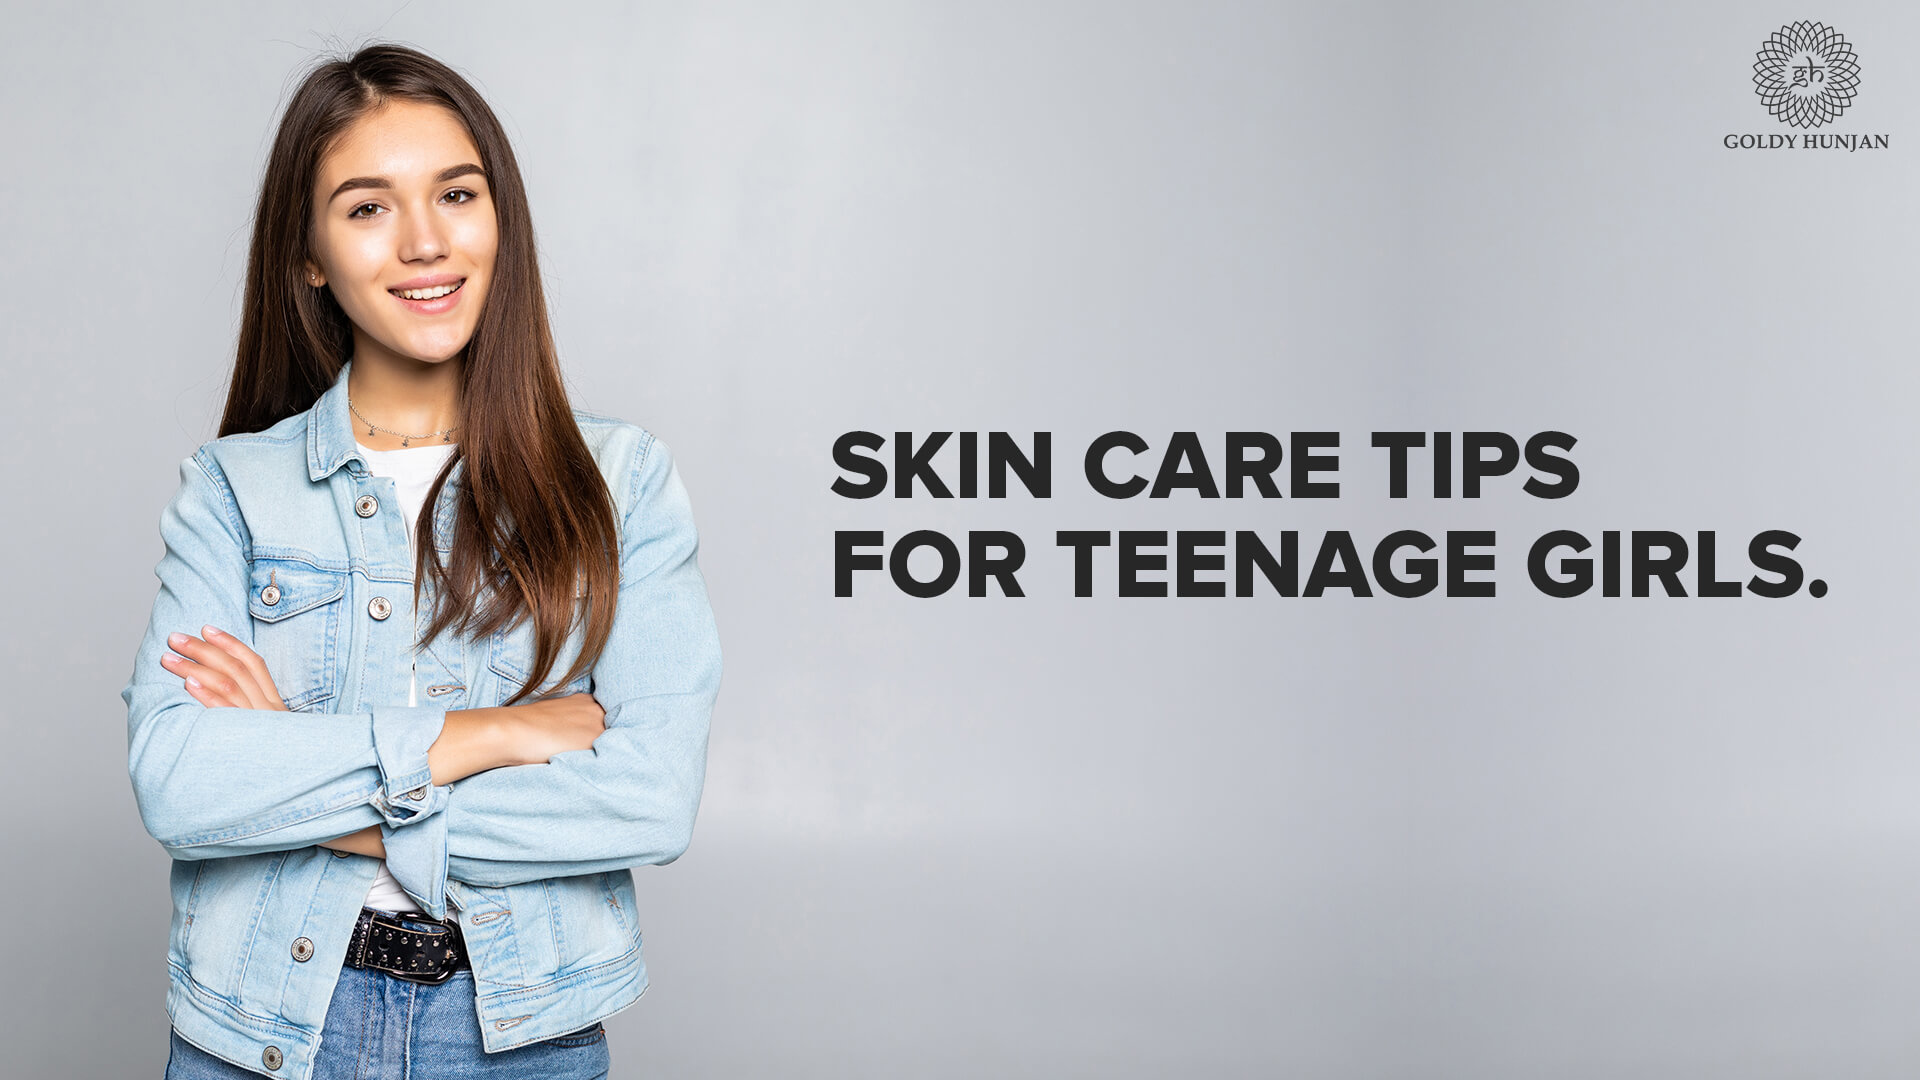 Skin care tips for teenage girls